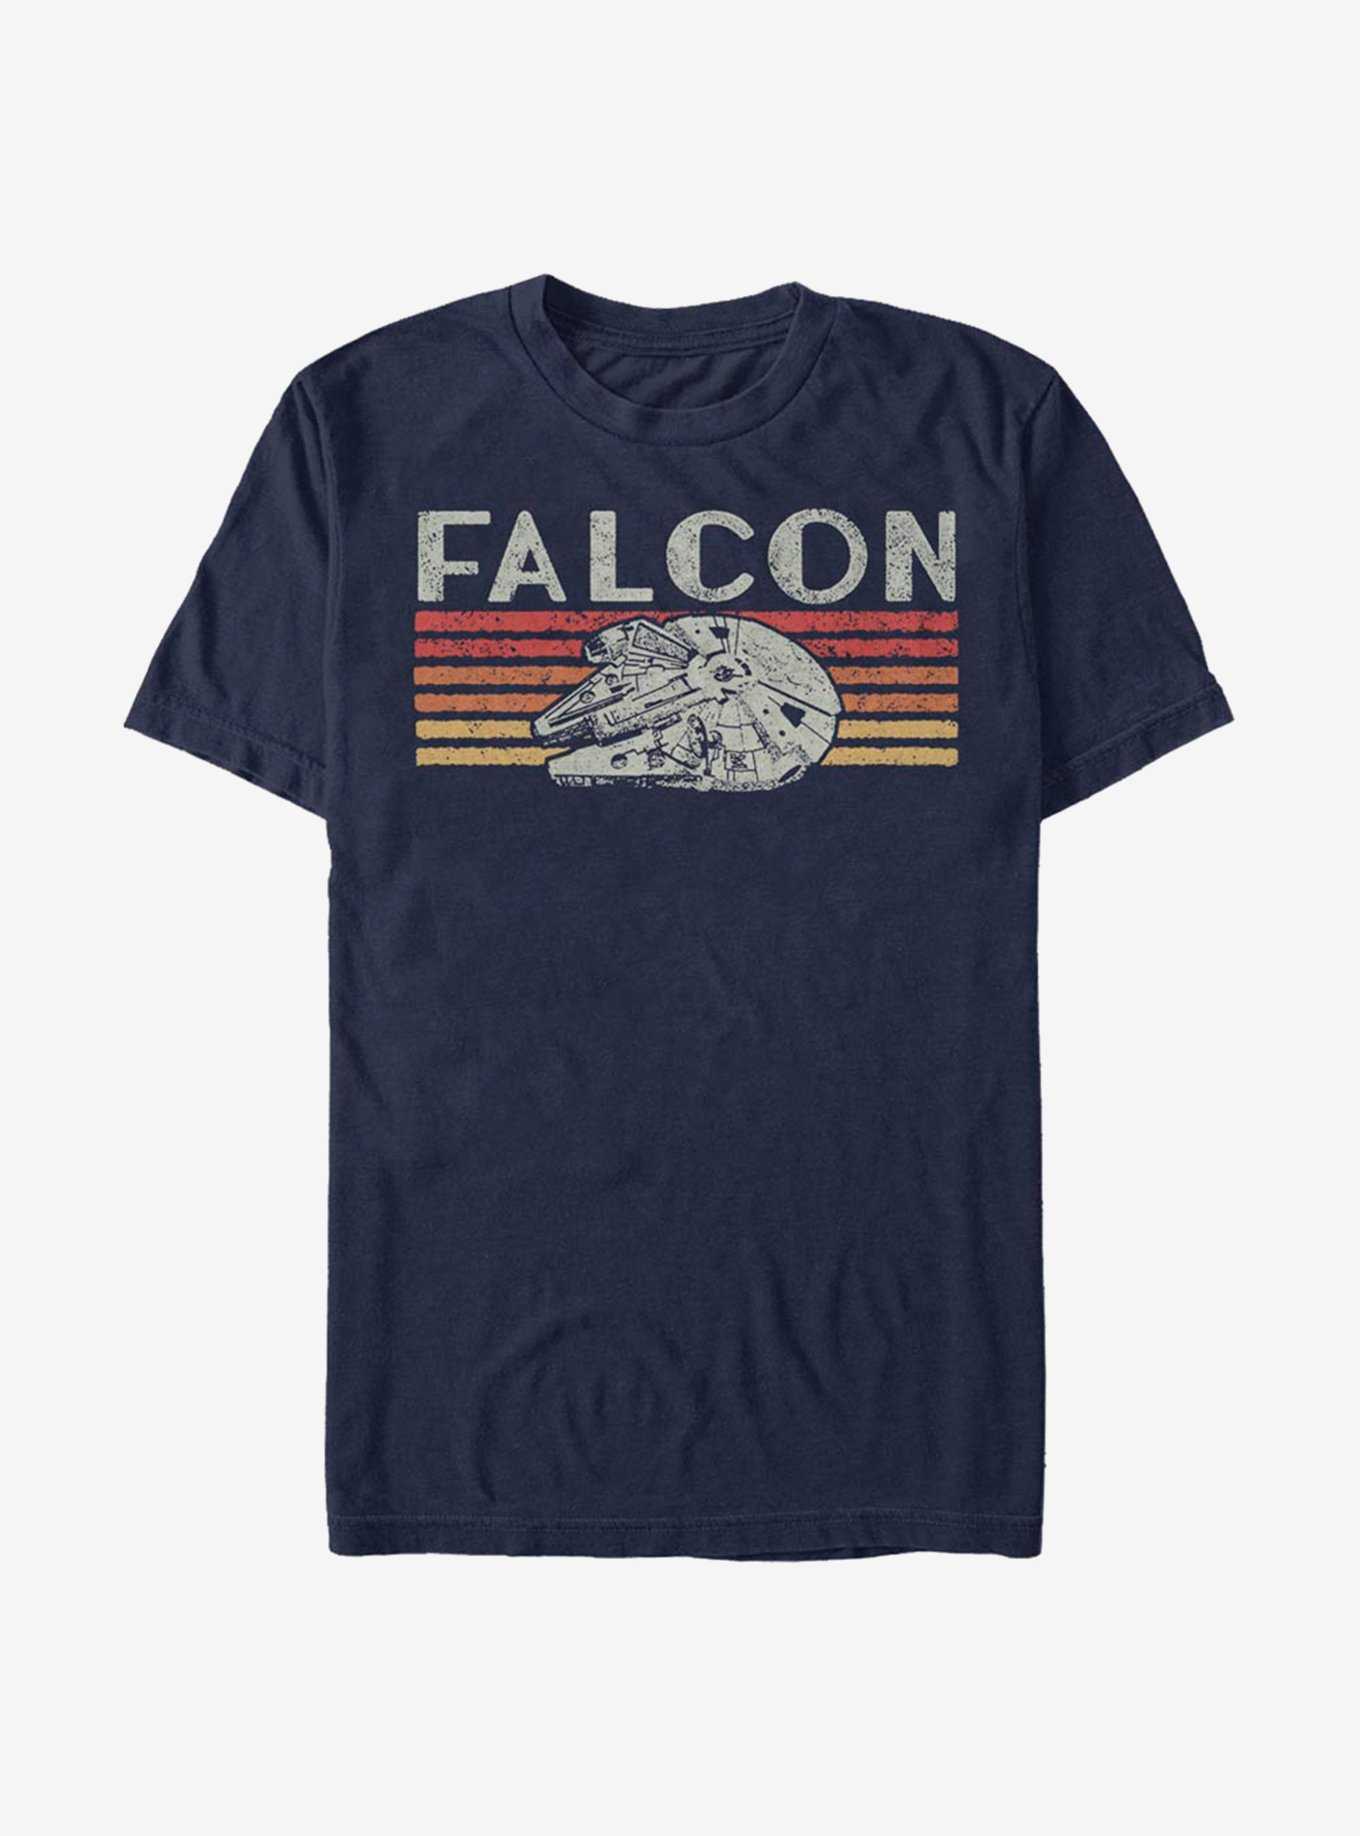 Star Wars Falcon Files T-Shirt, , hi-res